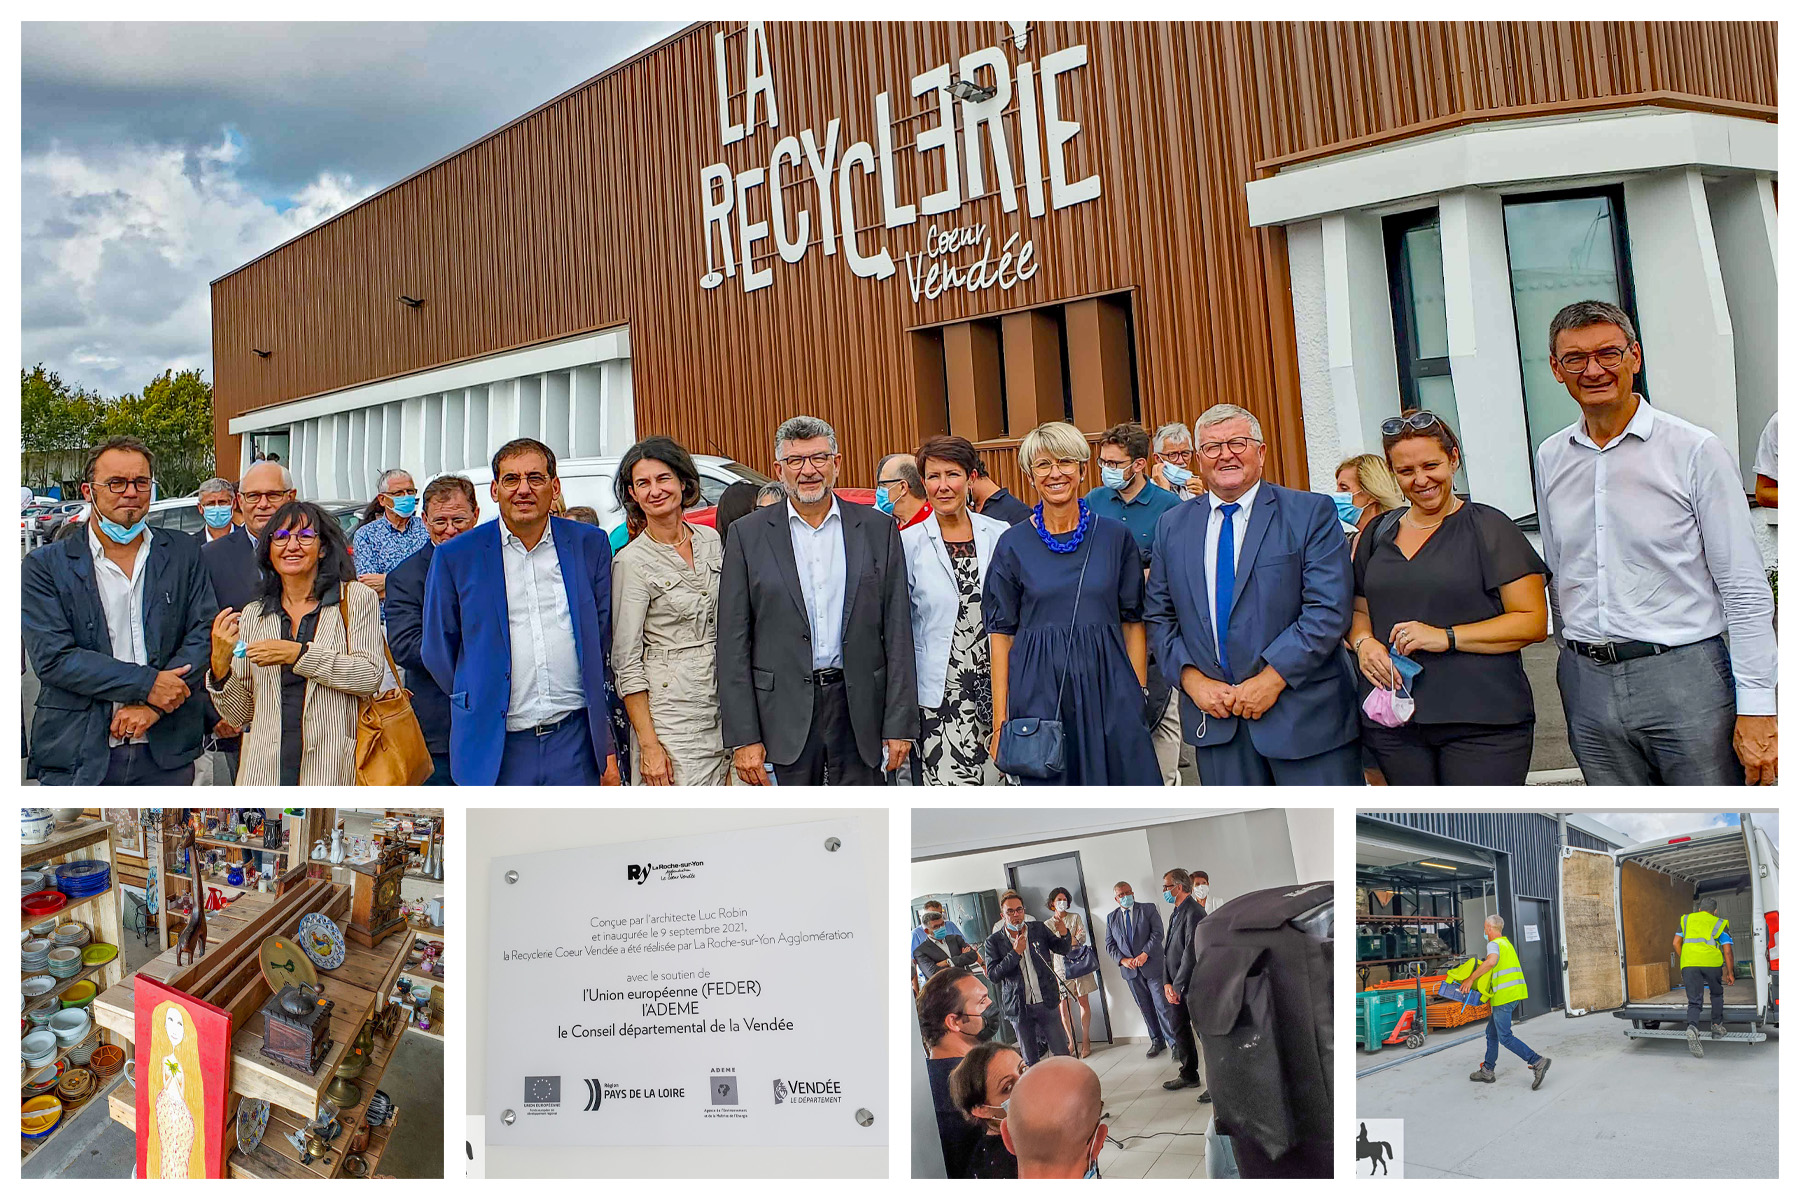 Recyclerie La Roche sur Yon mavillesolidaire.fr 20